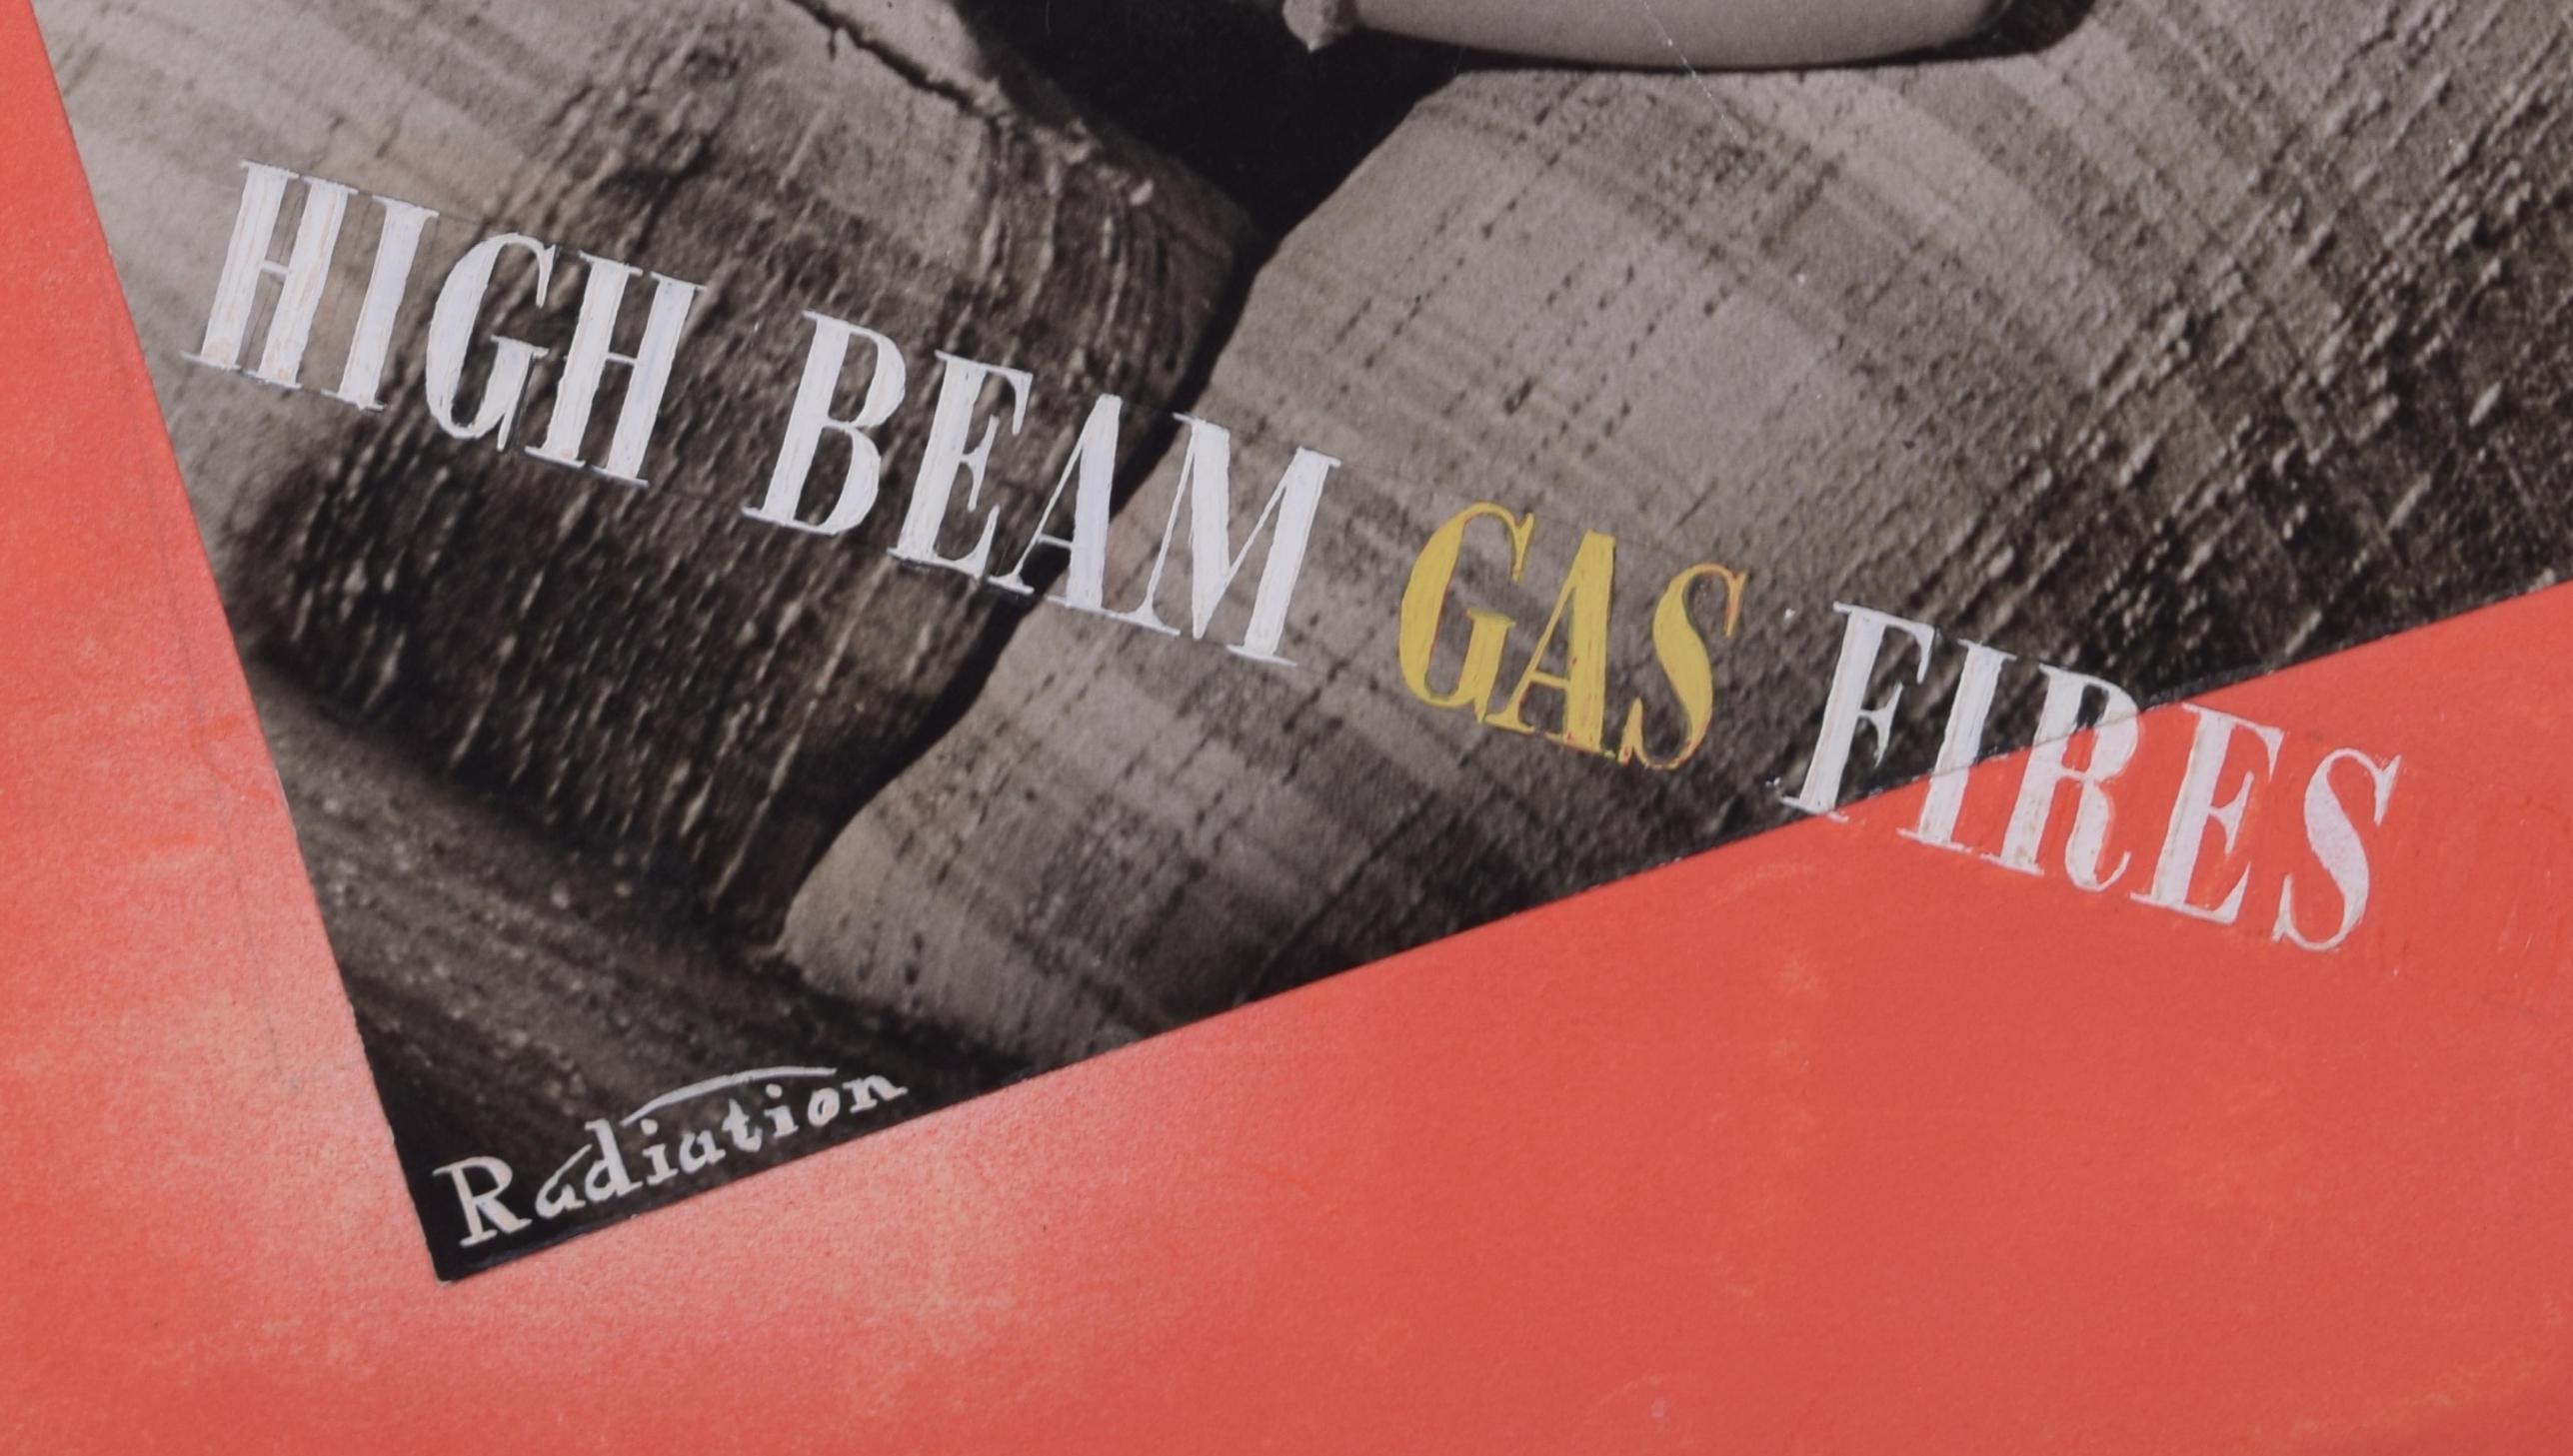 For Fireside Comfort, High Beam Gas Fires brochure design by Brownbridge For Sale 3